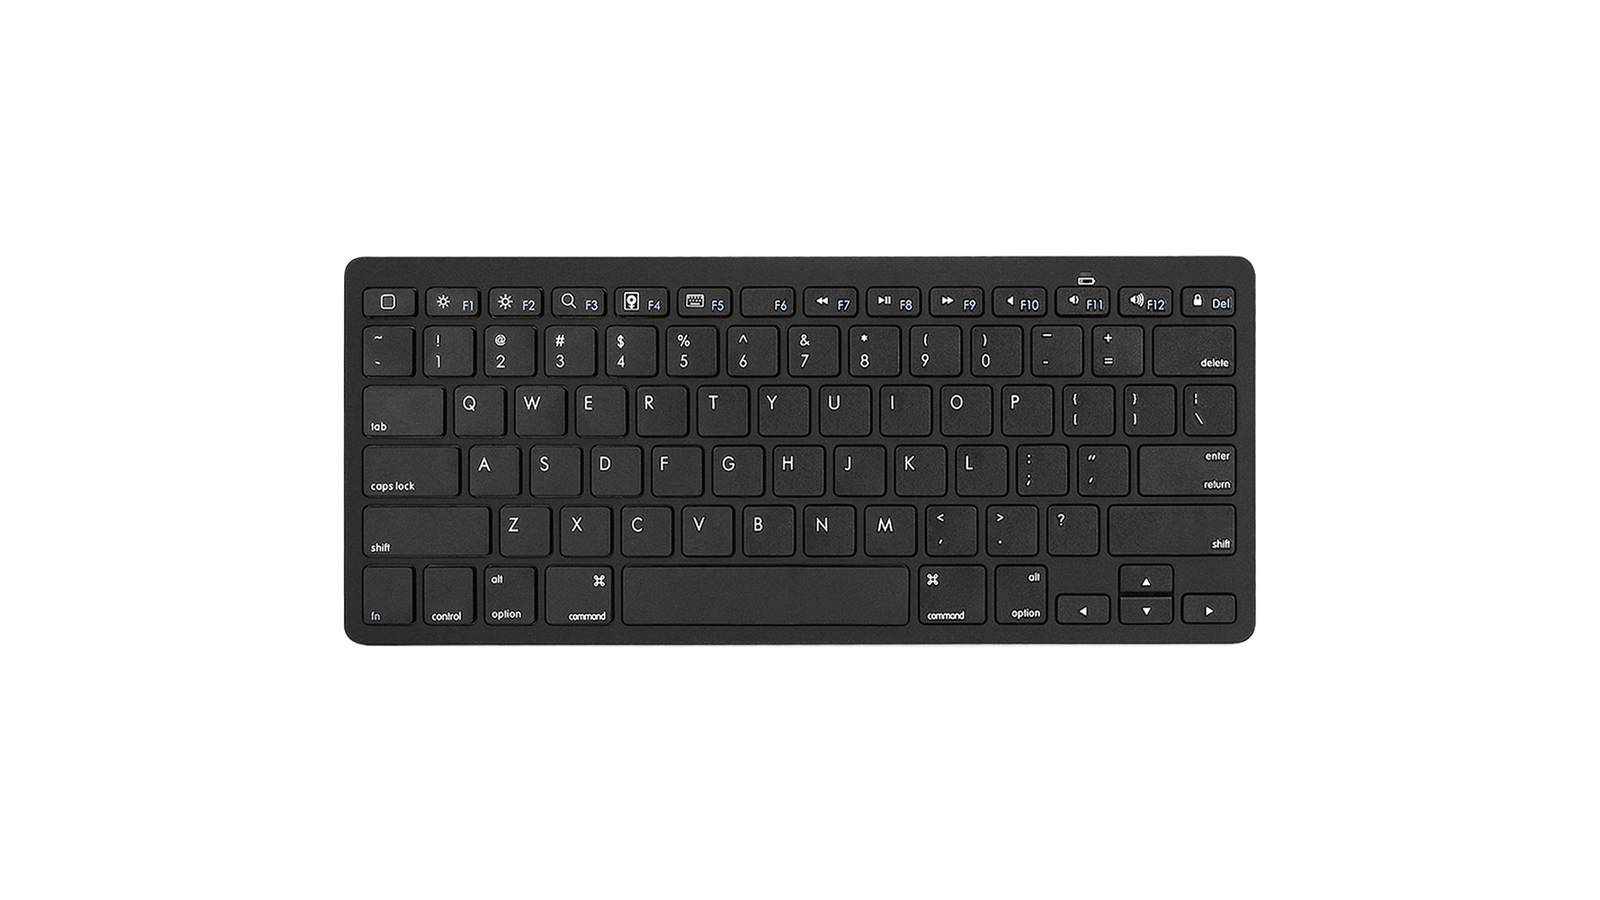 Omoton Ultra-Slim Bluetooth Keyboard - The best budget iPad mini keyboard option